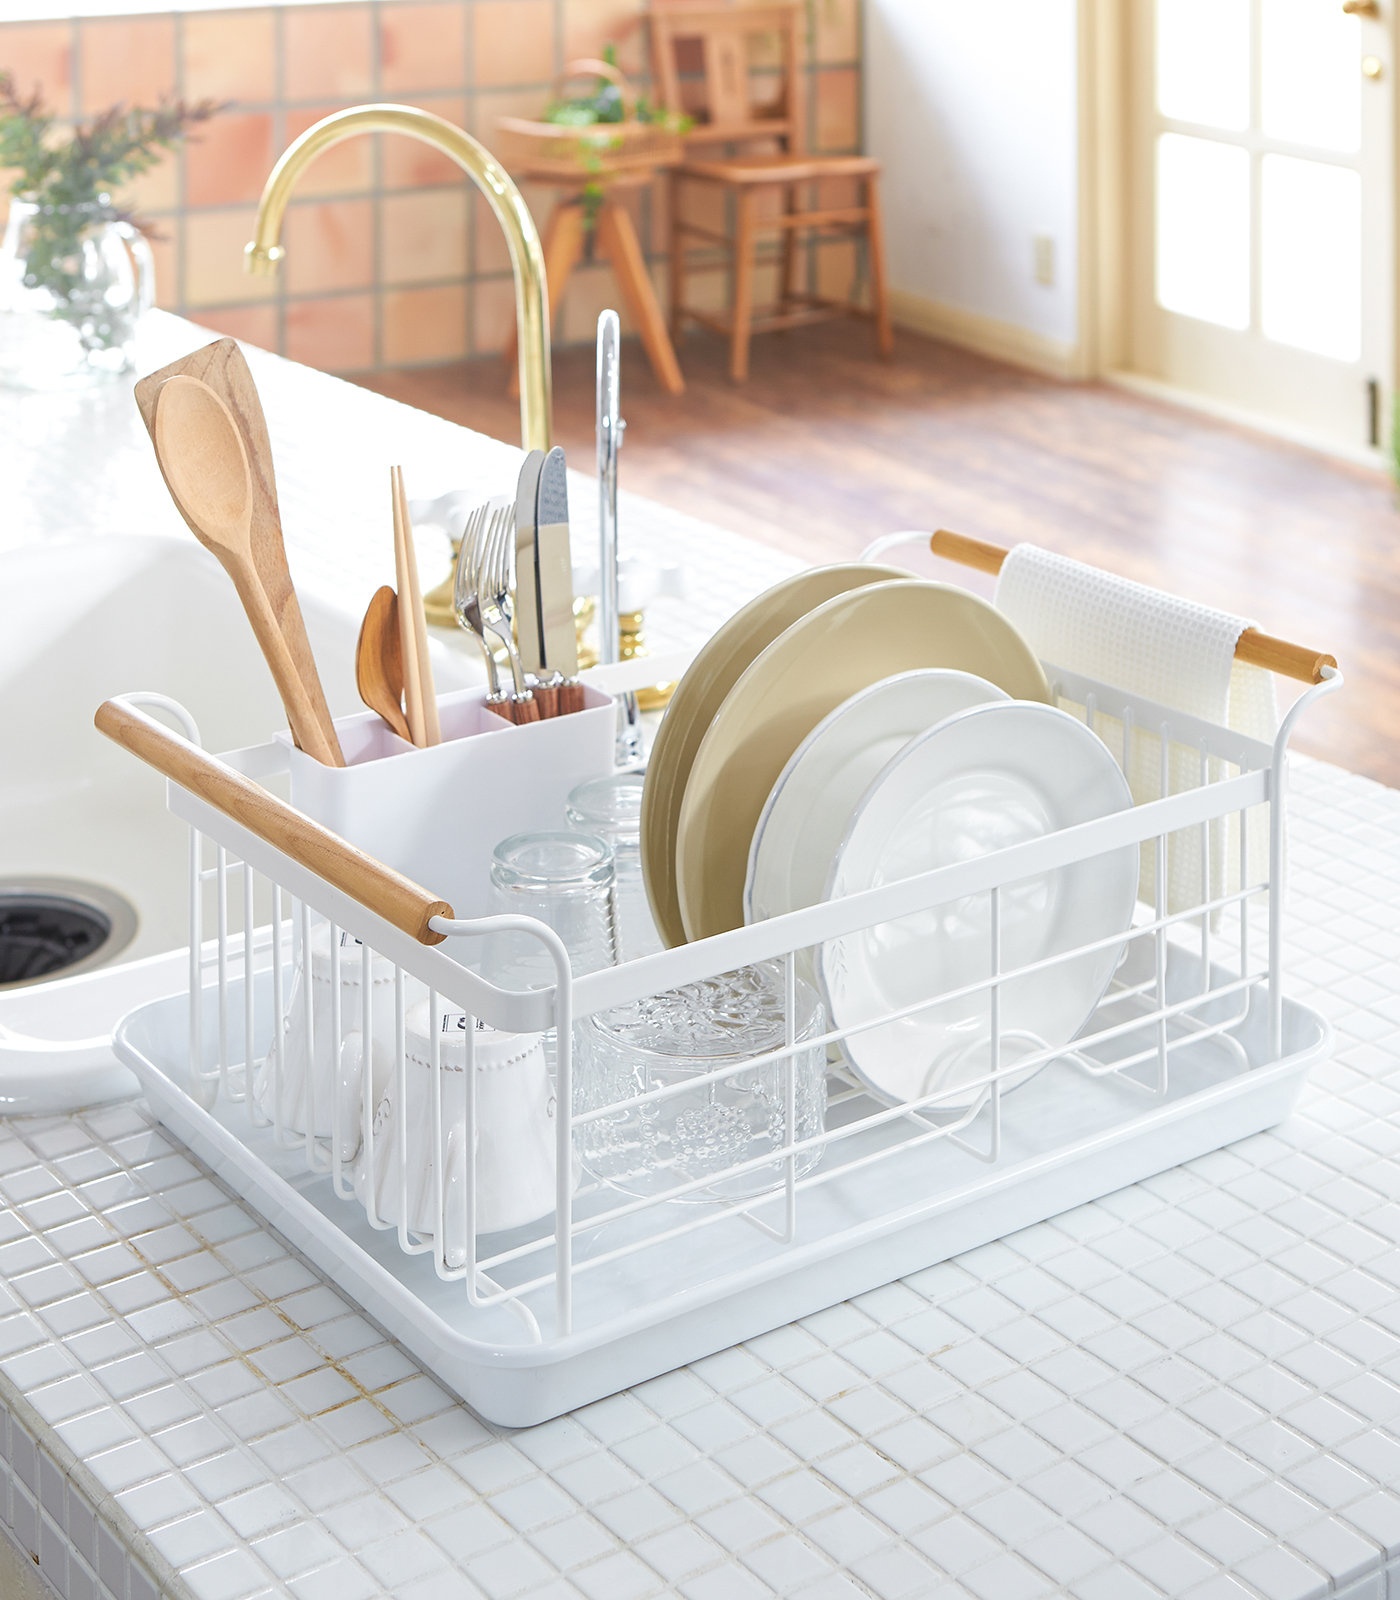 https://visualhunt.com/photos/23/tosca-yamazaki-home-dish-rack-with-removeable-drainer-tray-steel-wood-handles-utensil-holder.jpg